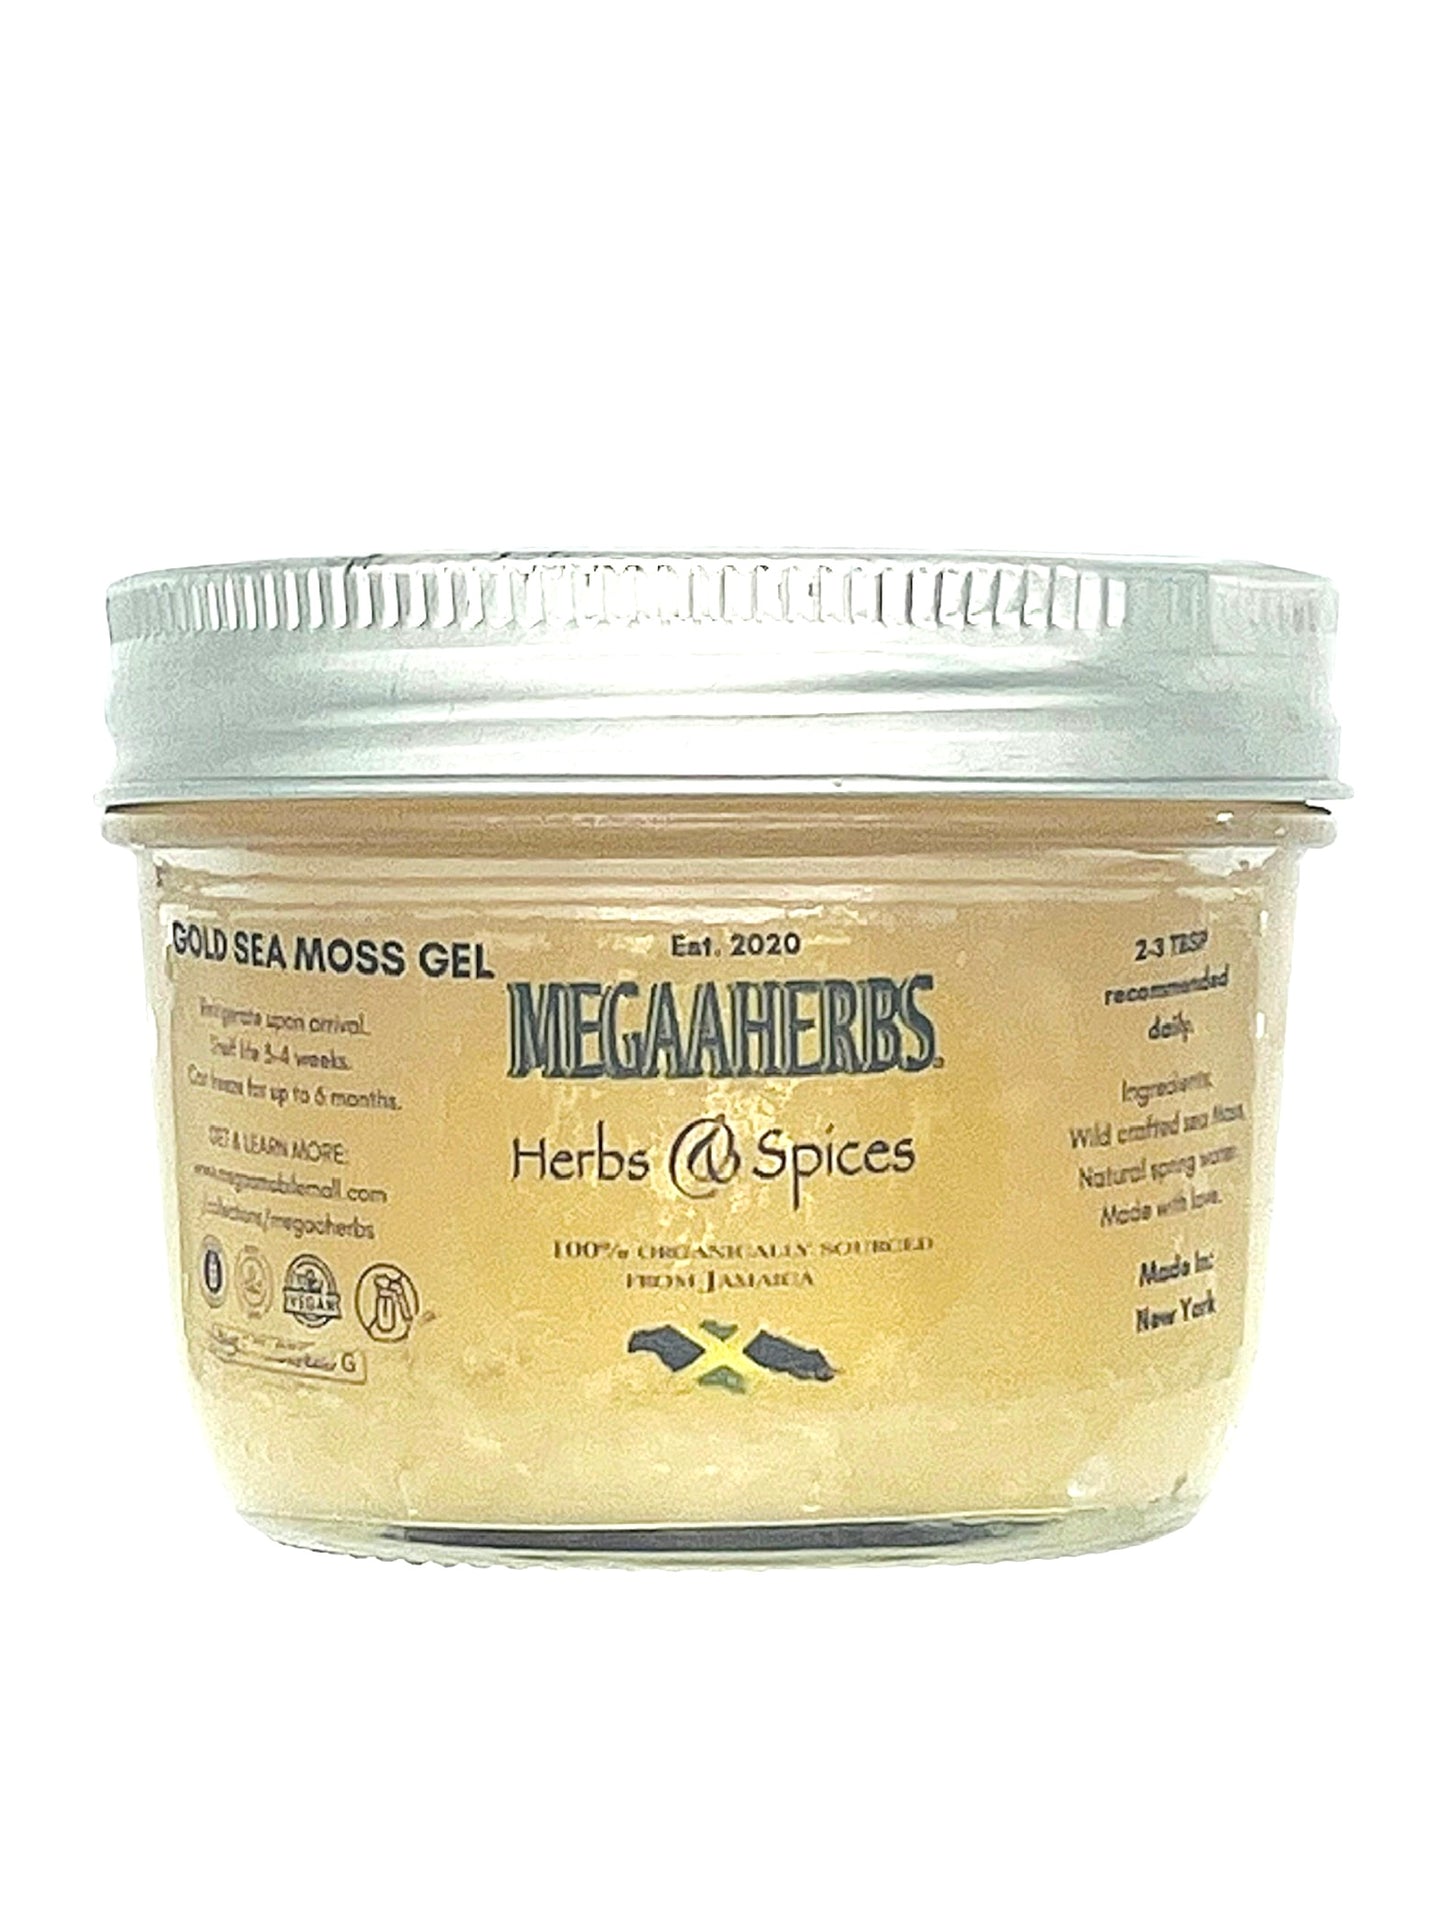 megaaherbs sea moss gel in 8 fl oz mason jars with labels on the jar side